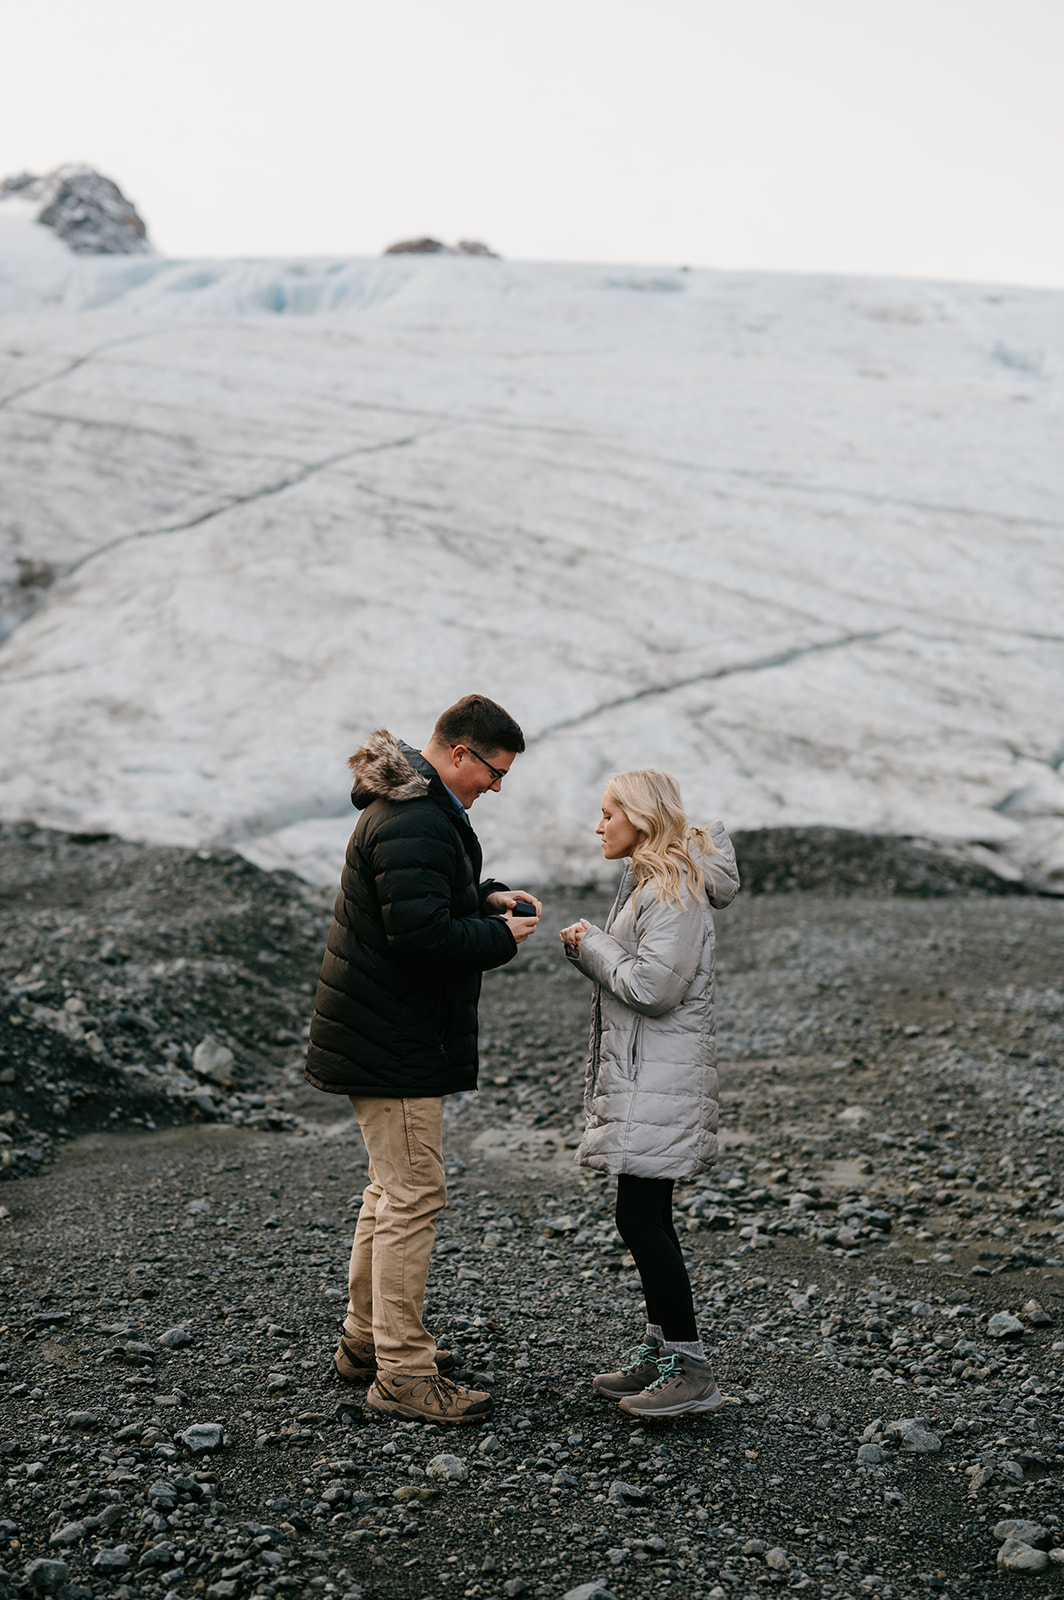 A couple proposed on a glacier in Alaska.